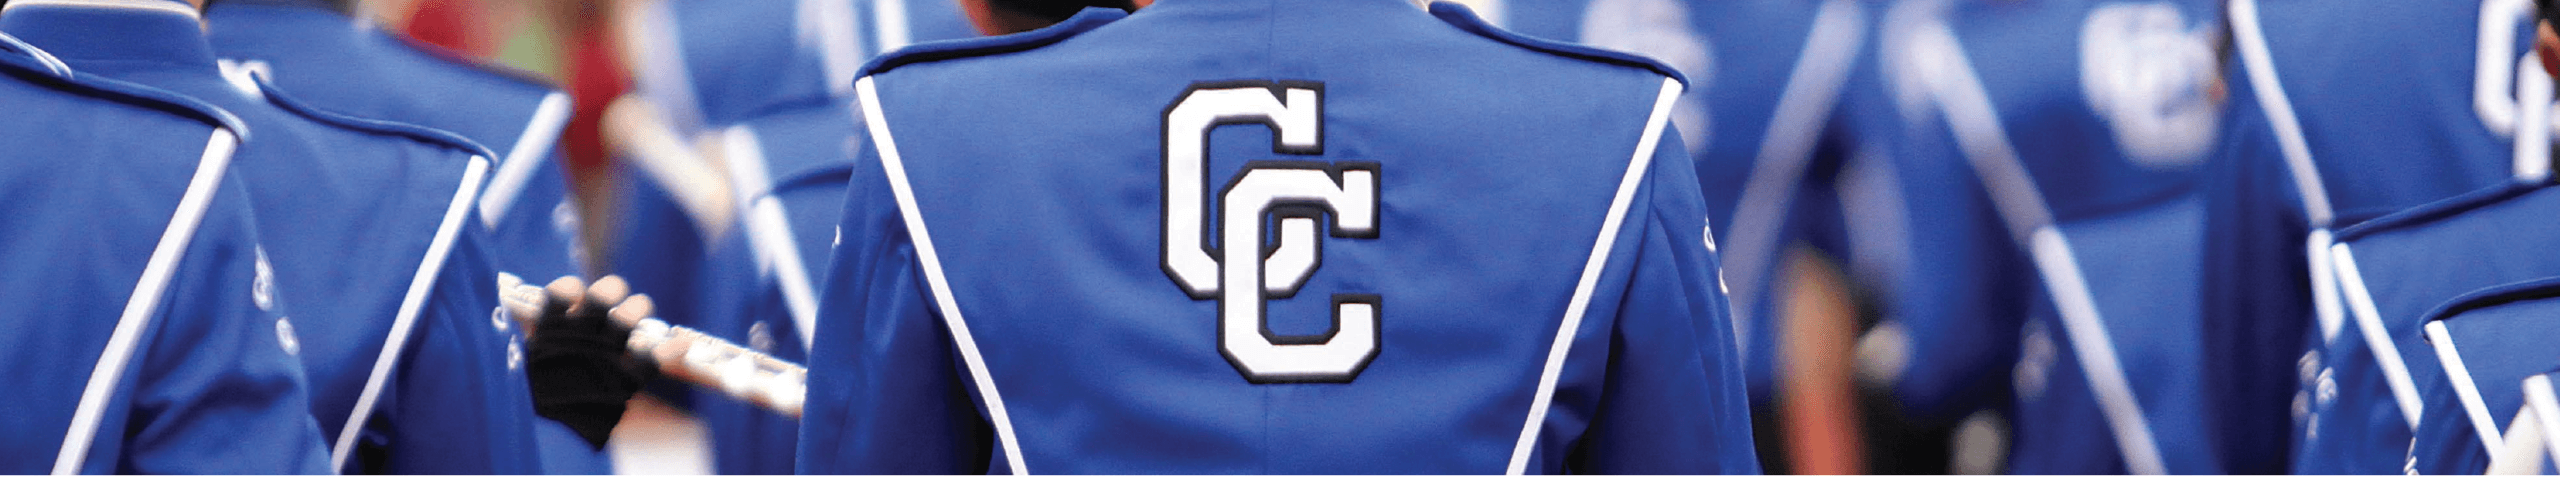 CC logo on band uniforms for Aluminator